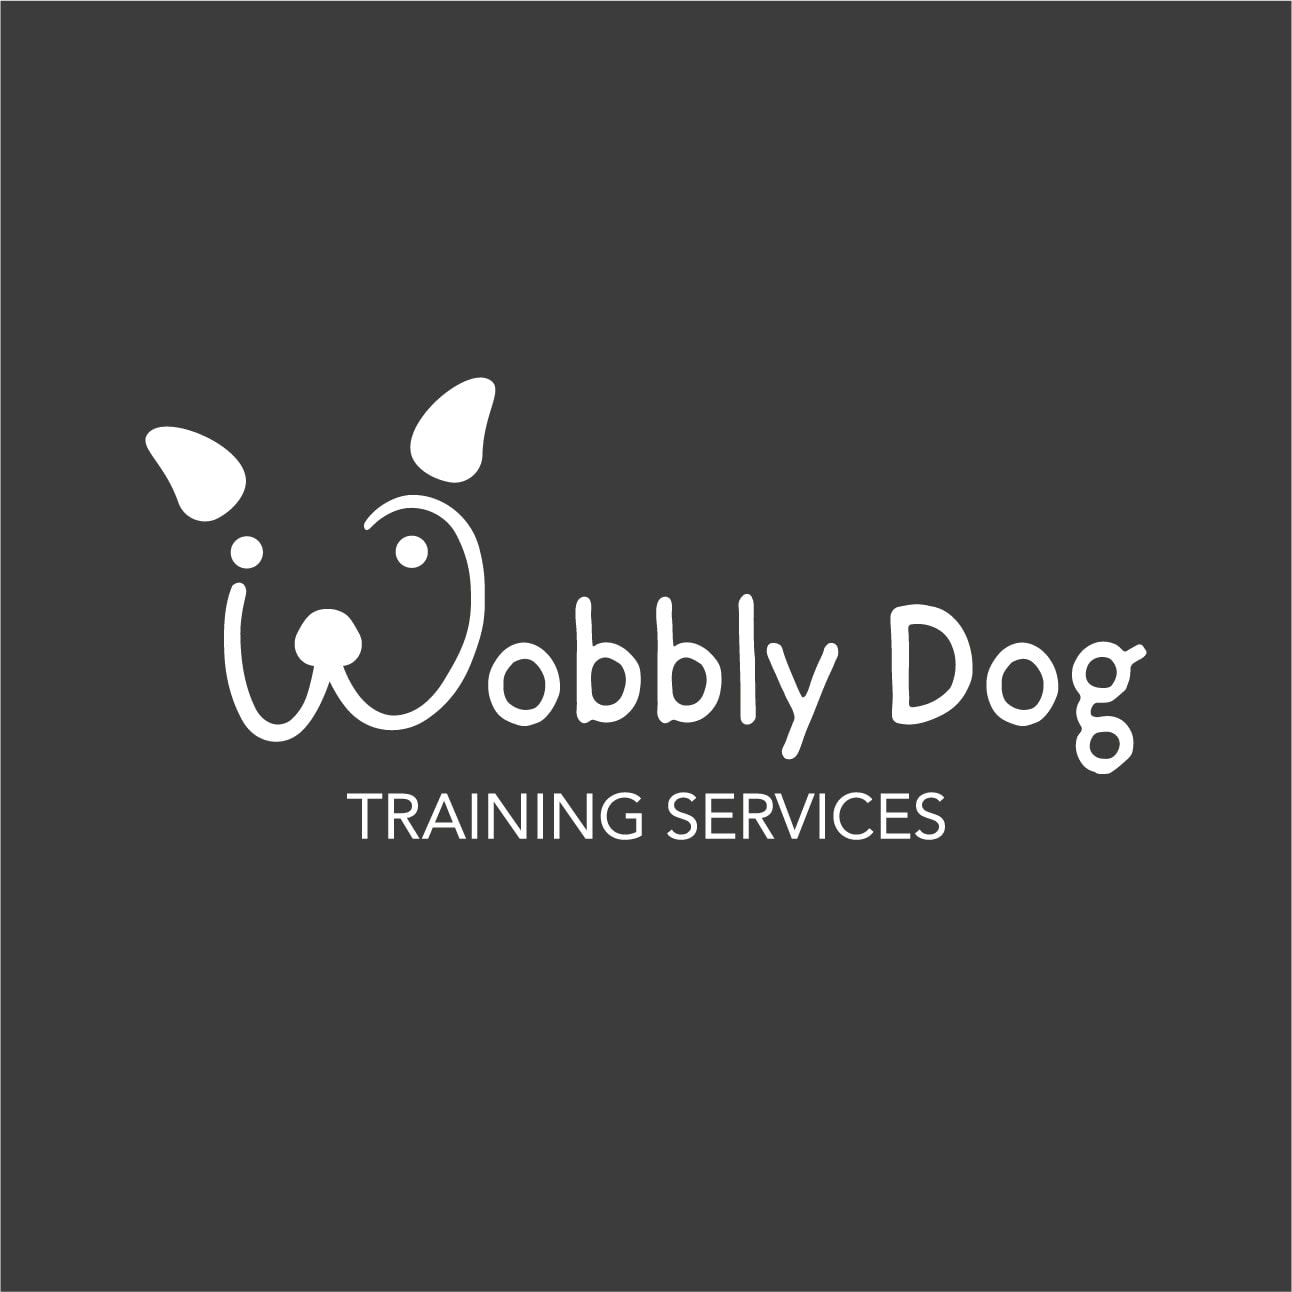 Images Wobbly Dog Training Services